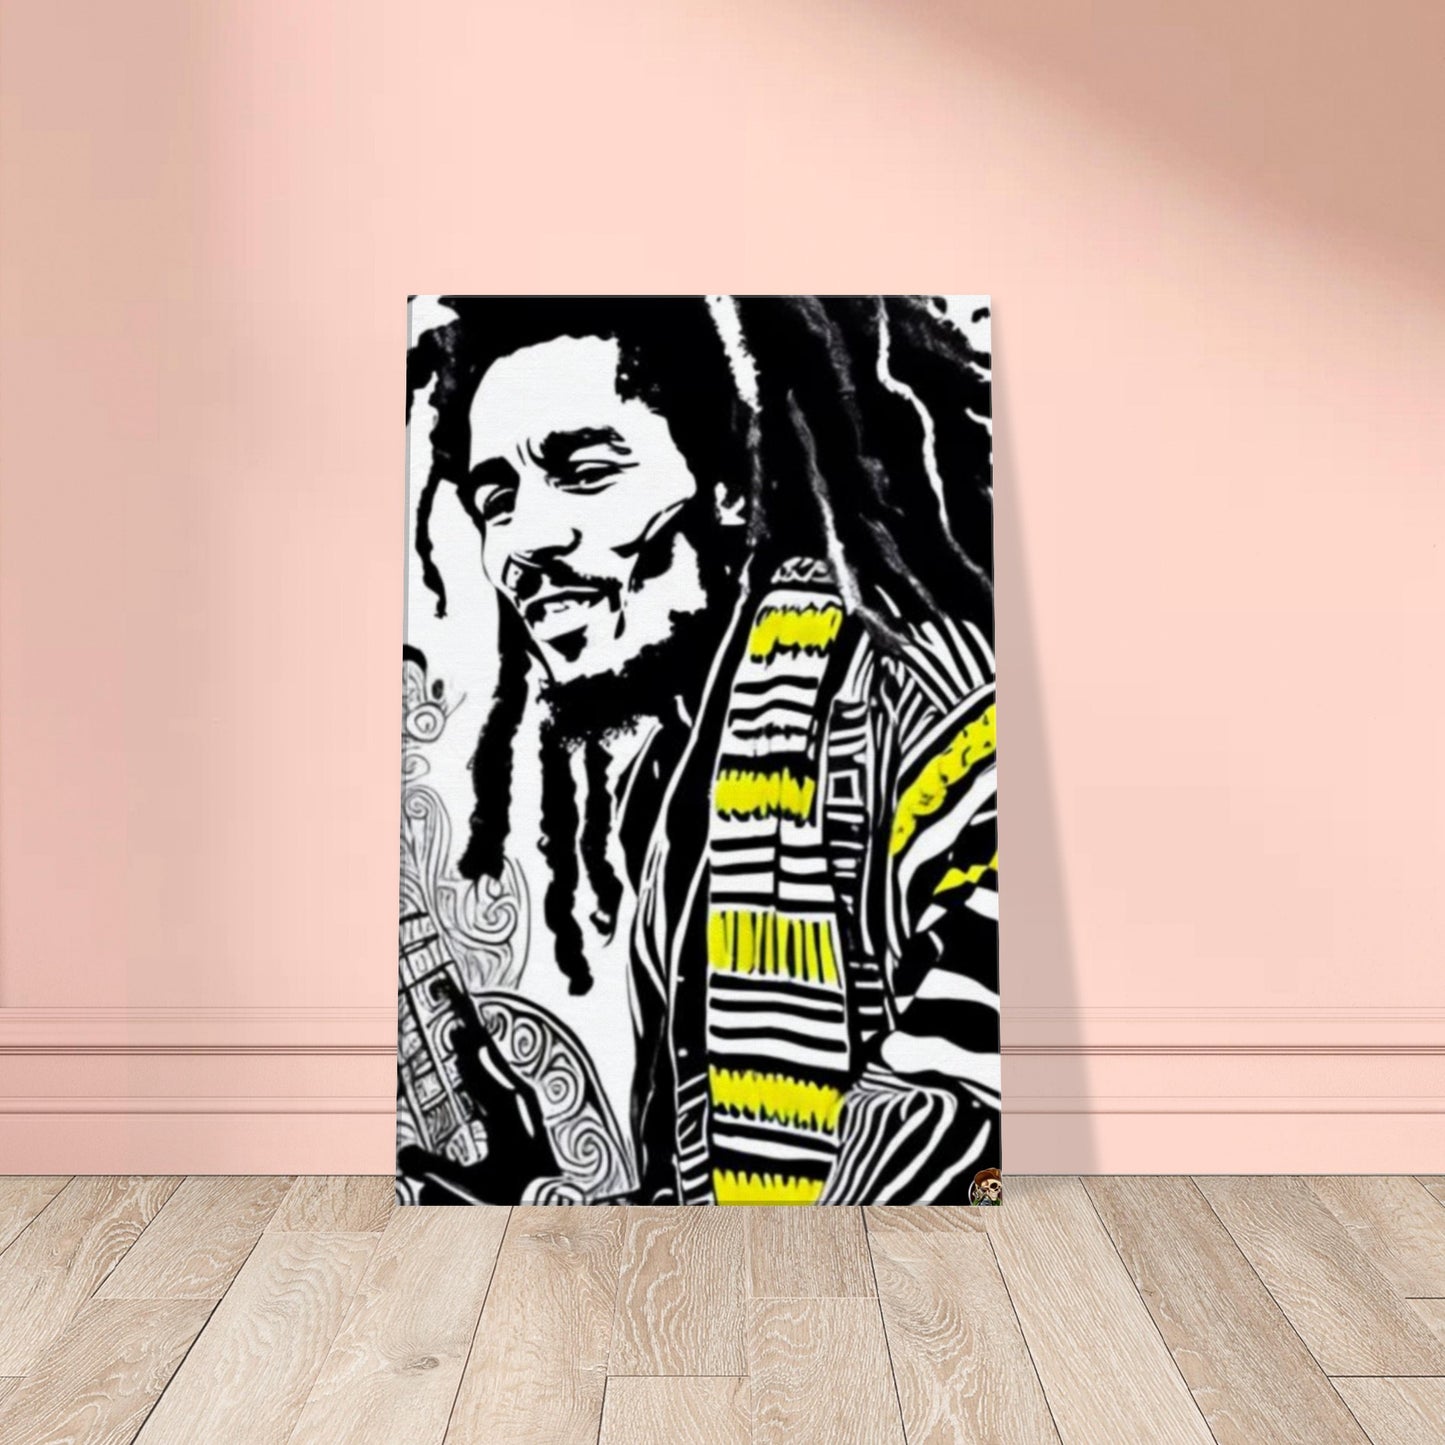 Bob Marley Canvas gemaakt door Ötzi Frosty